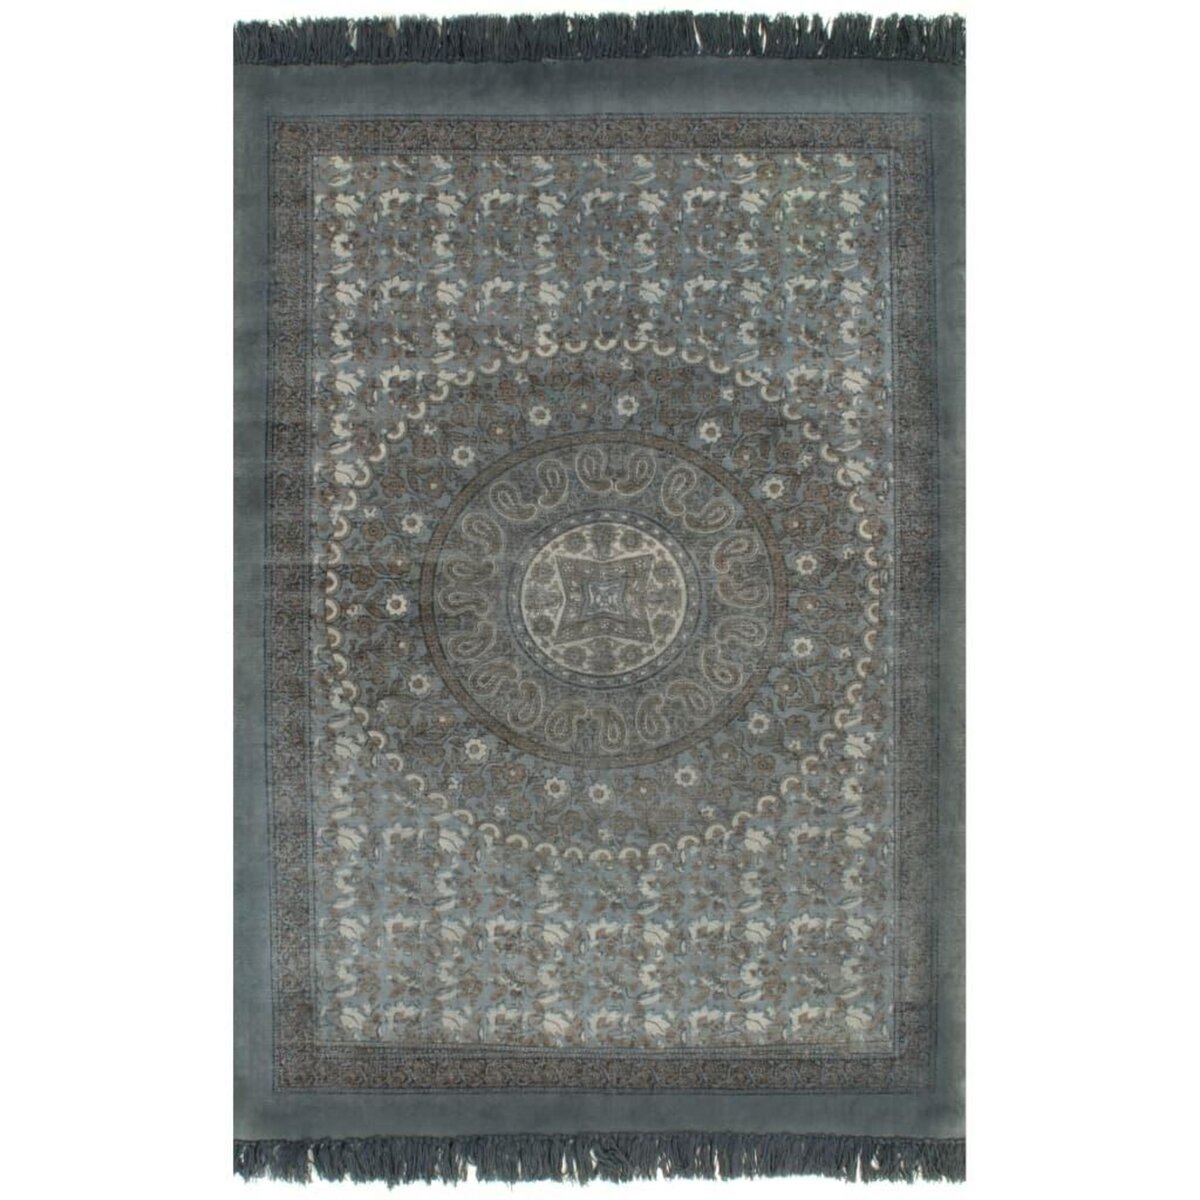 VIDAXL Tapis Kilim Coton 120 x 180 cm avec motif Gris